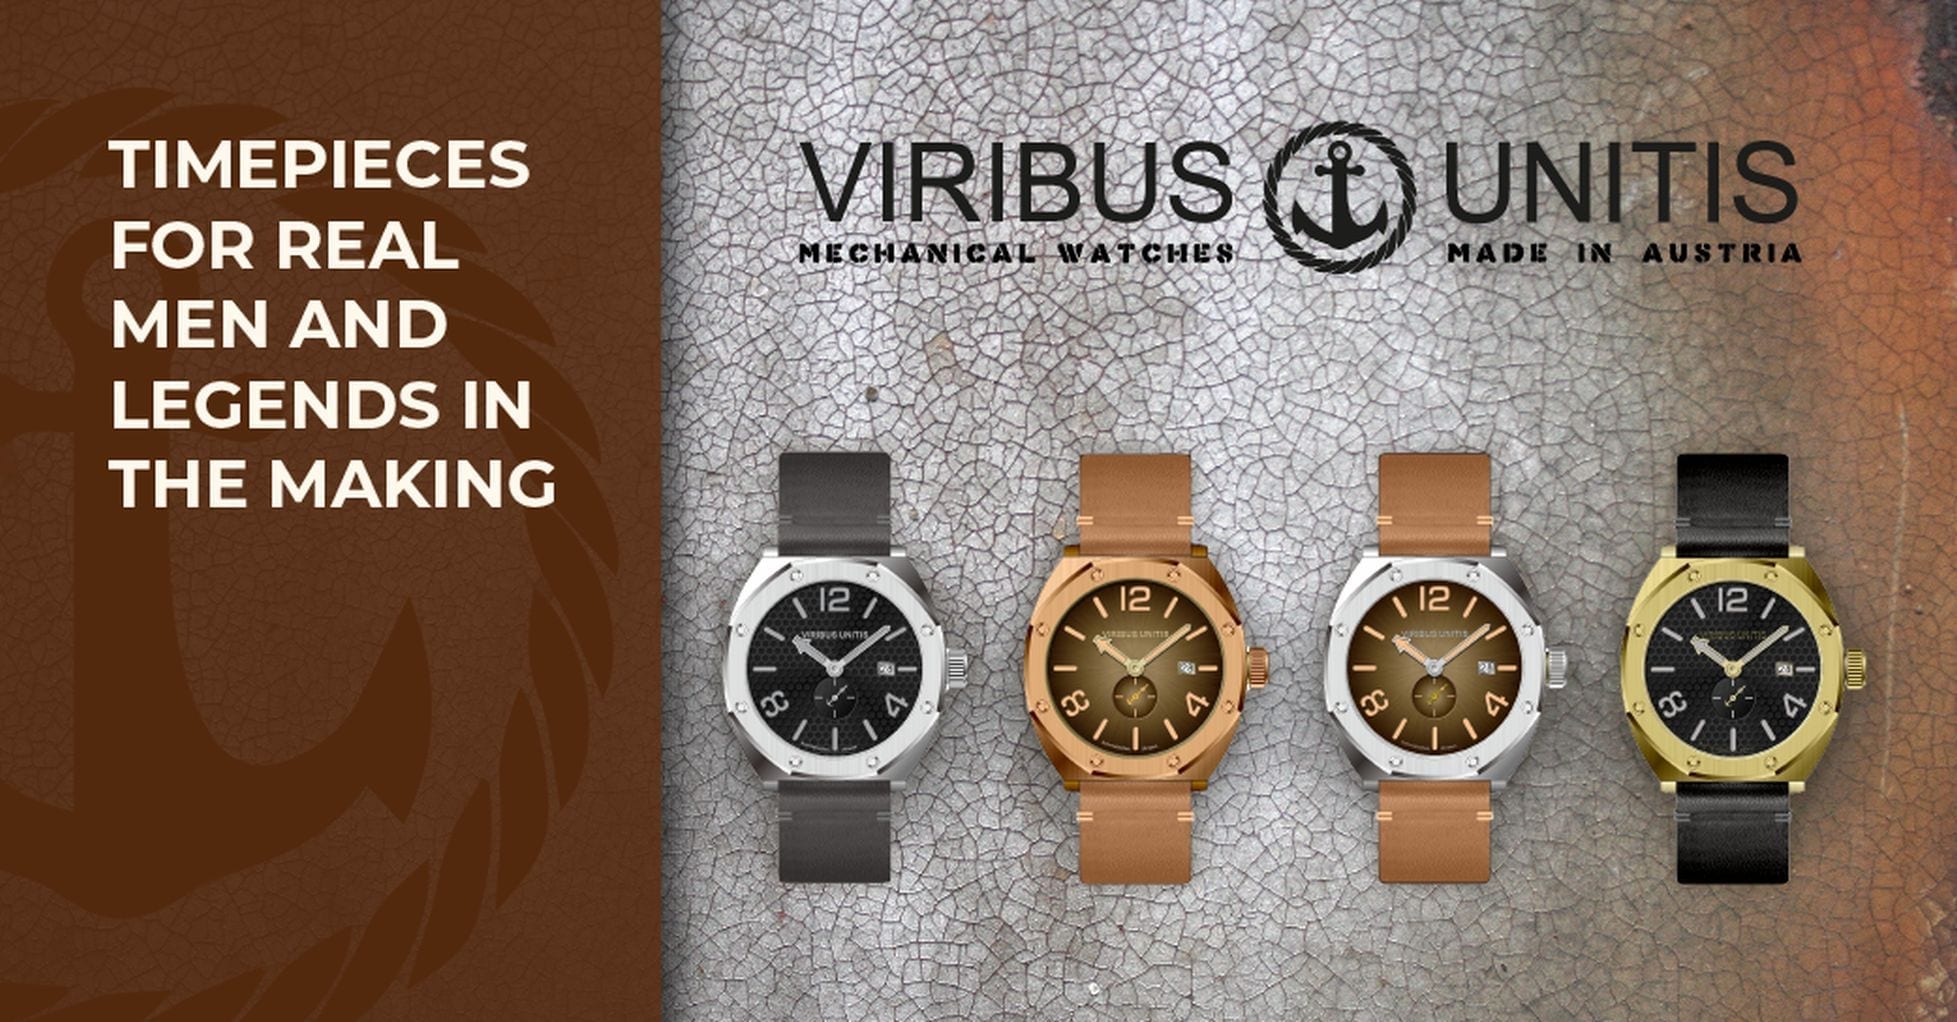 (c) Viribusunitis-watches.com